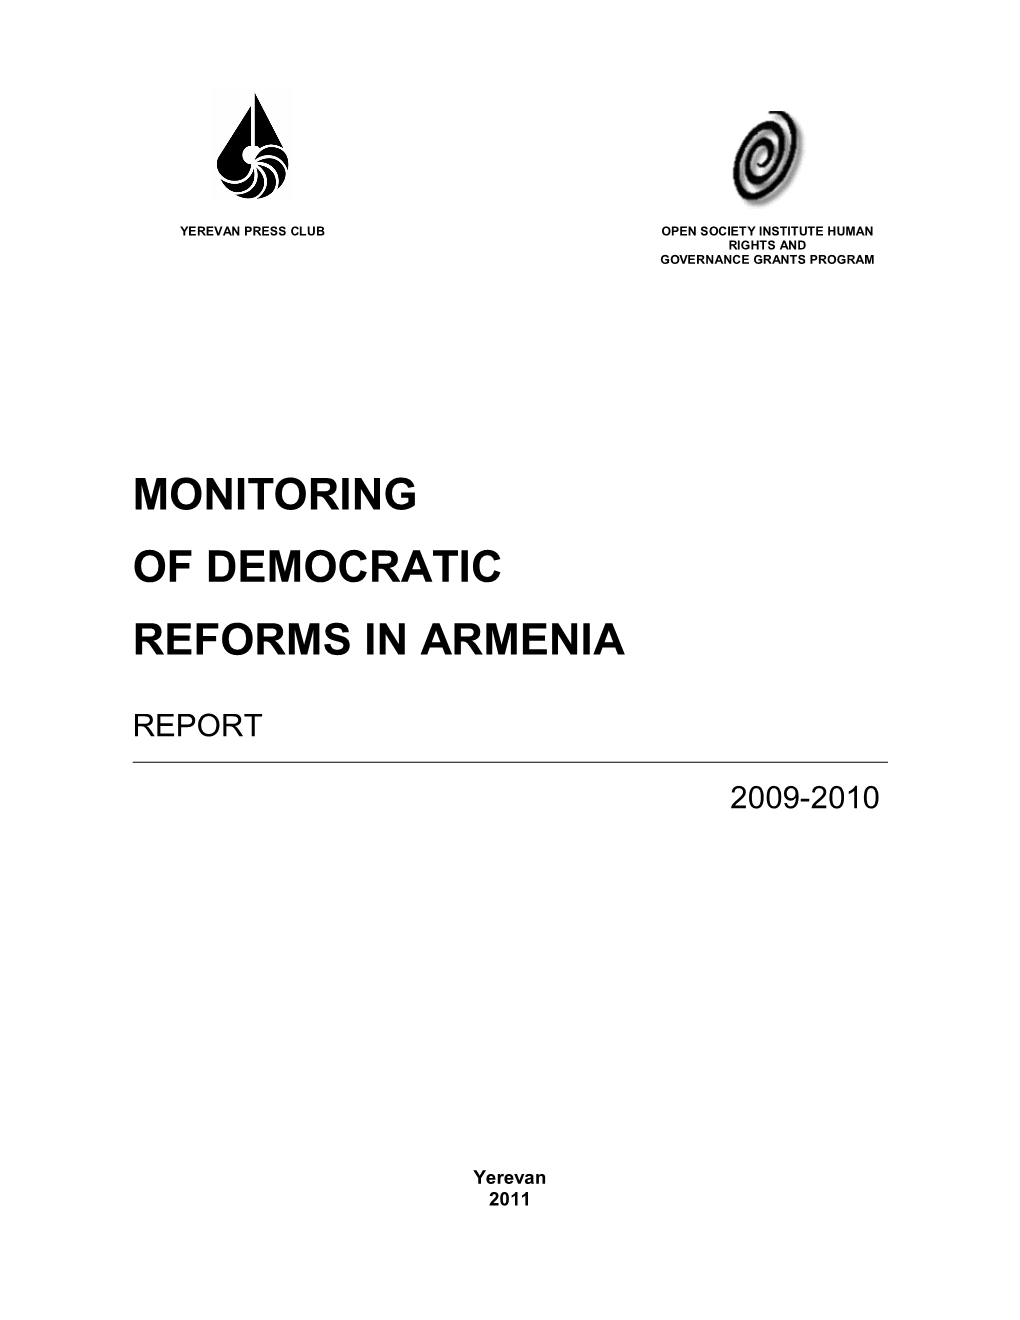 Monitoring of Democratic Reforms in Armenia 2009-2010